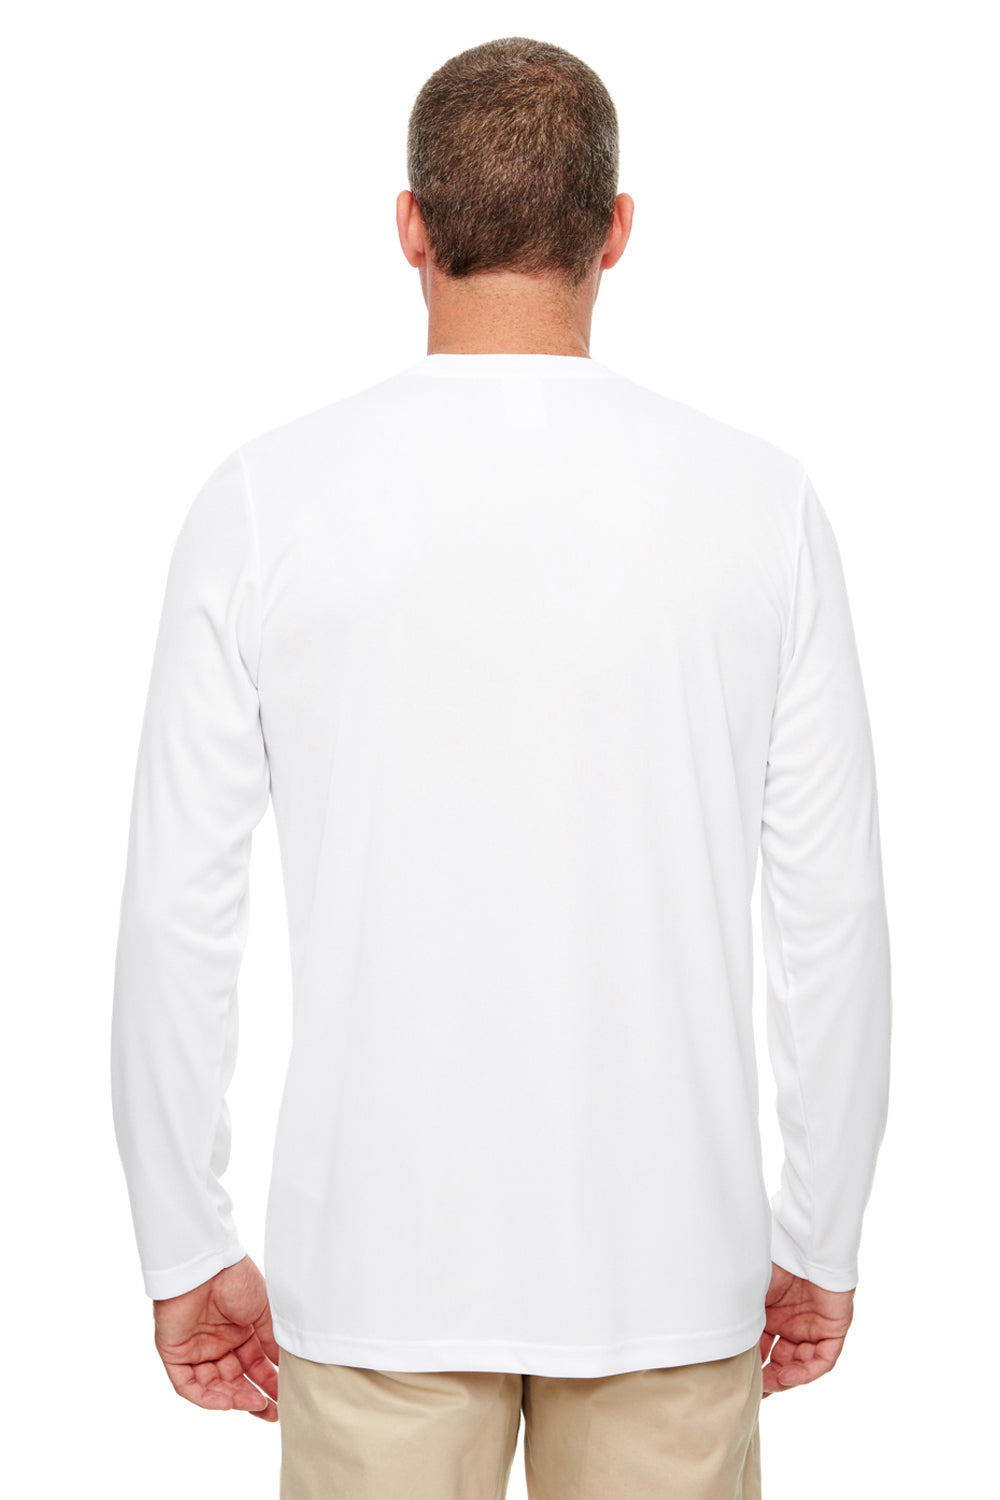 UltraClub 8622 Mens Cool & Dry Performance Moisture Wicking Long Sleeve Crewneck T-Shirt White Back